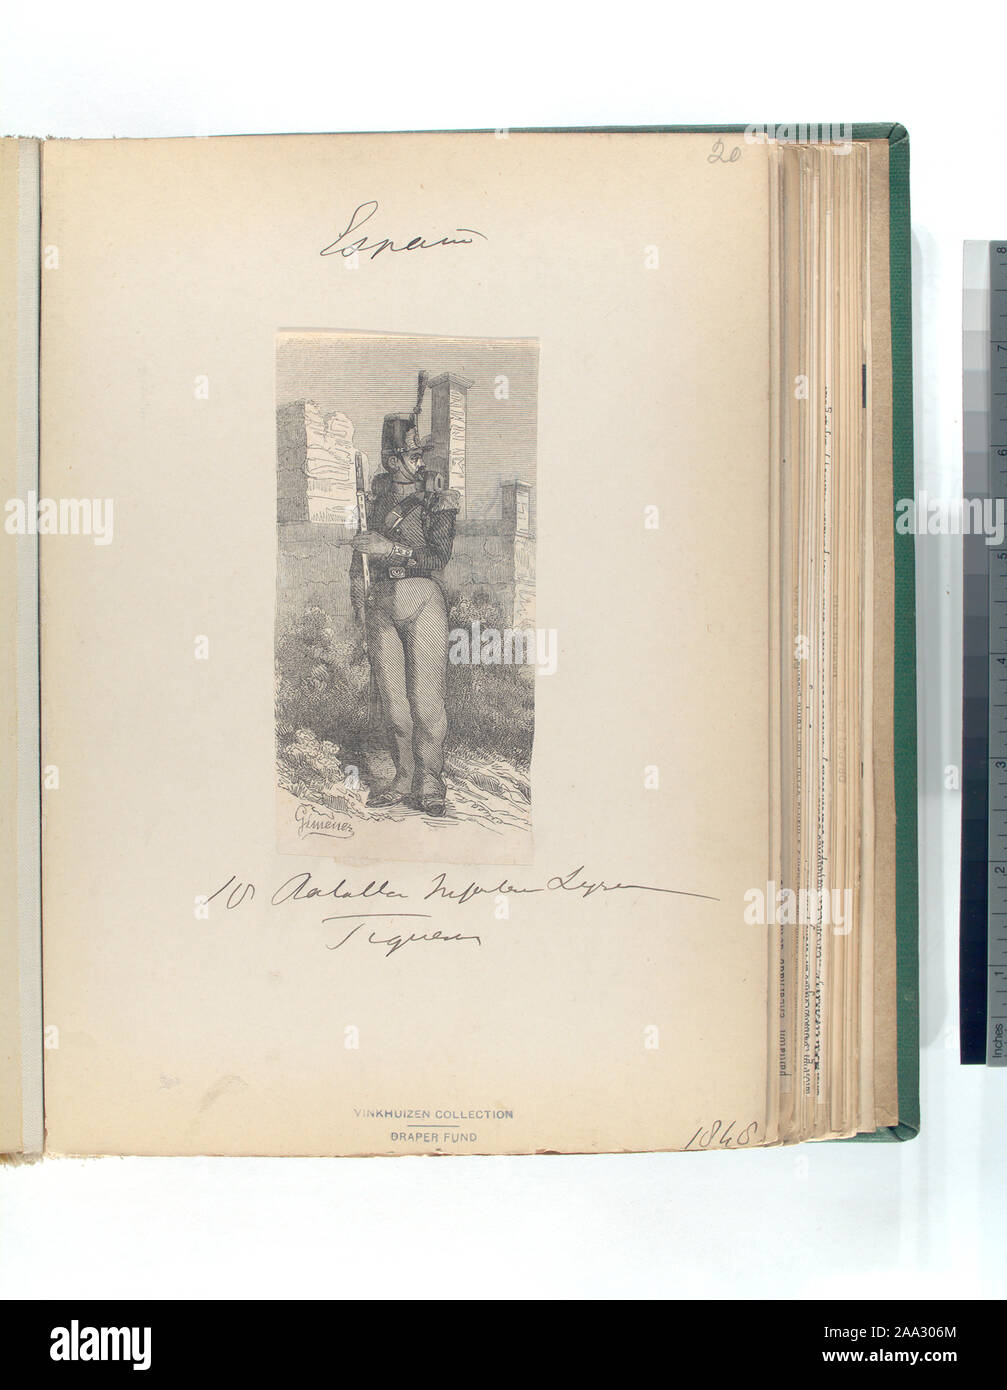 Draper Fund; 16 Batallon [de] Infanteria Ligera . Piquero [?]  1848 Stock Photo